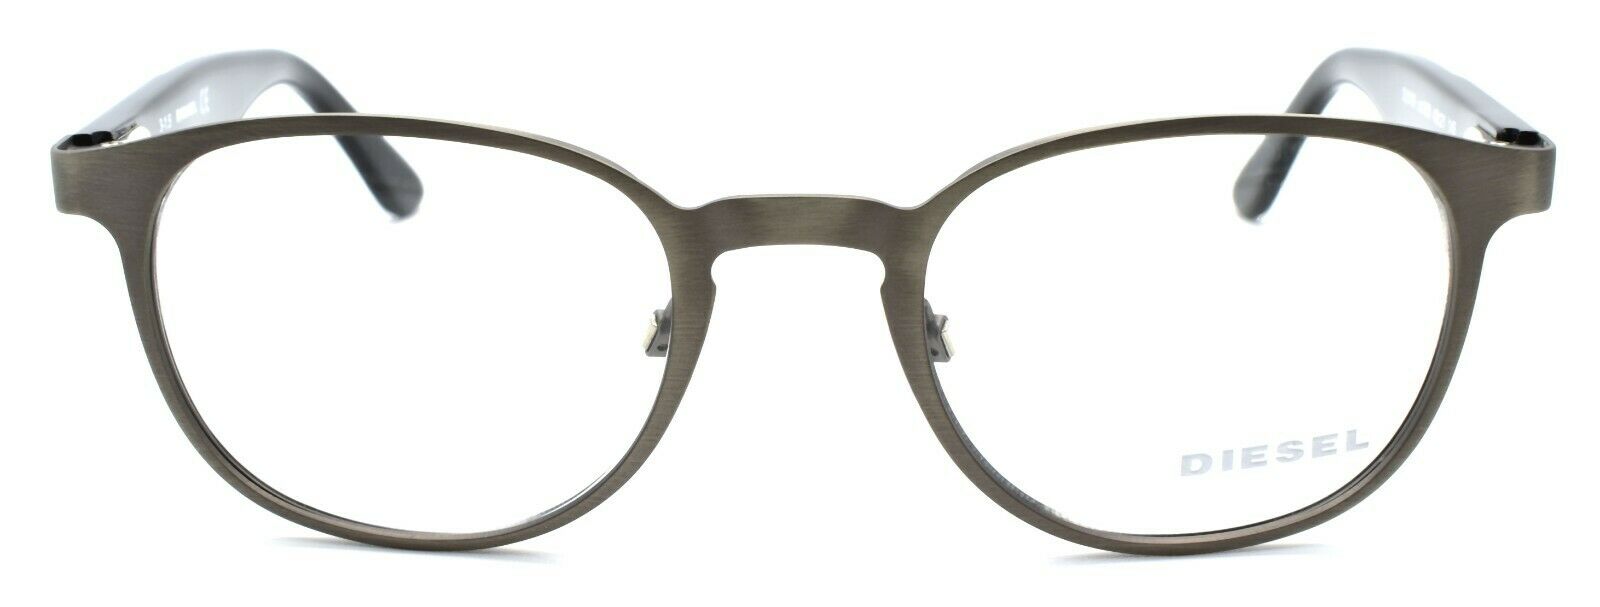 2-Diesel DL5169 009 Men's Eyeglasses Frames 49-21-145 Matte Gunmetal / Black-664689709380-IKSpecs